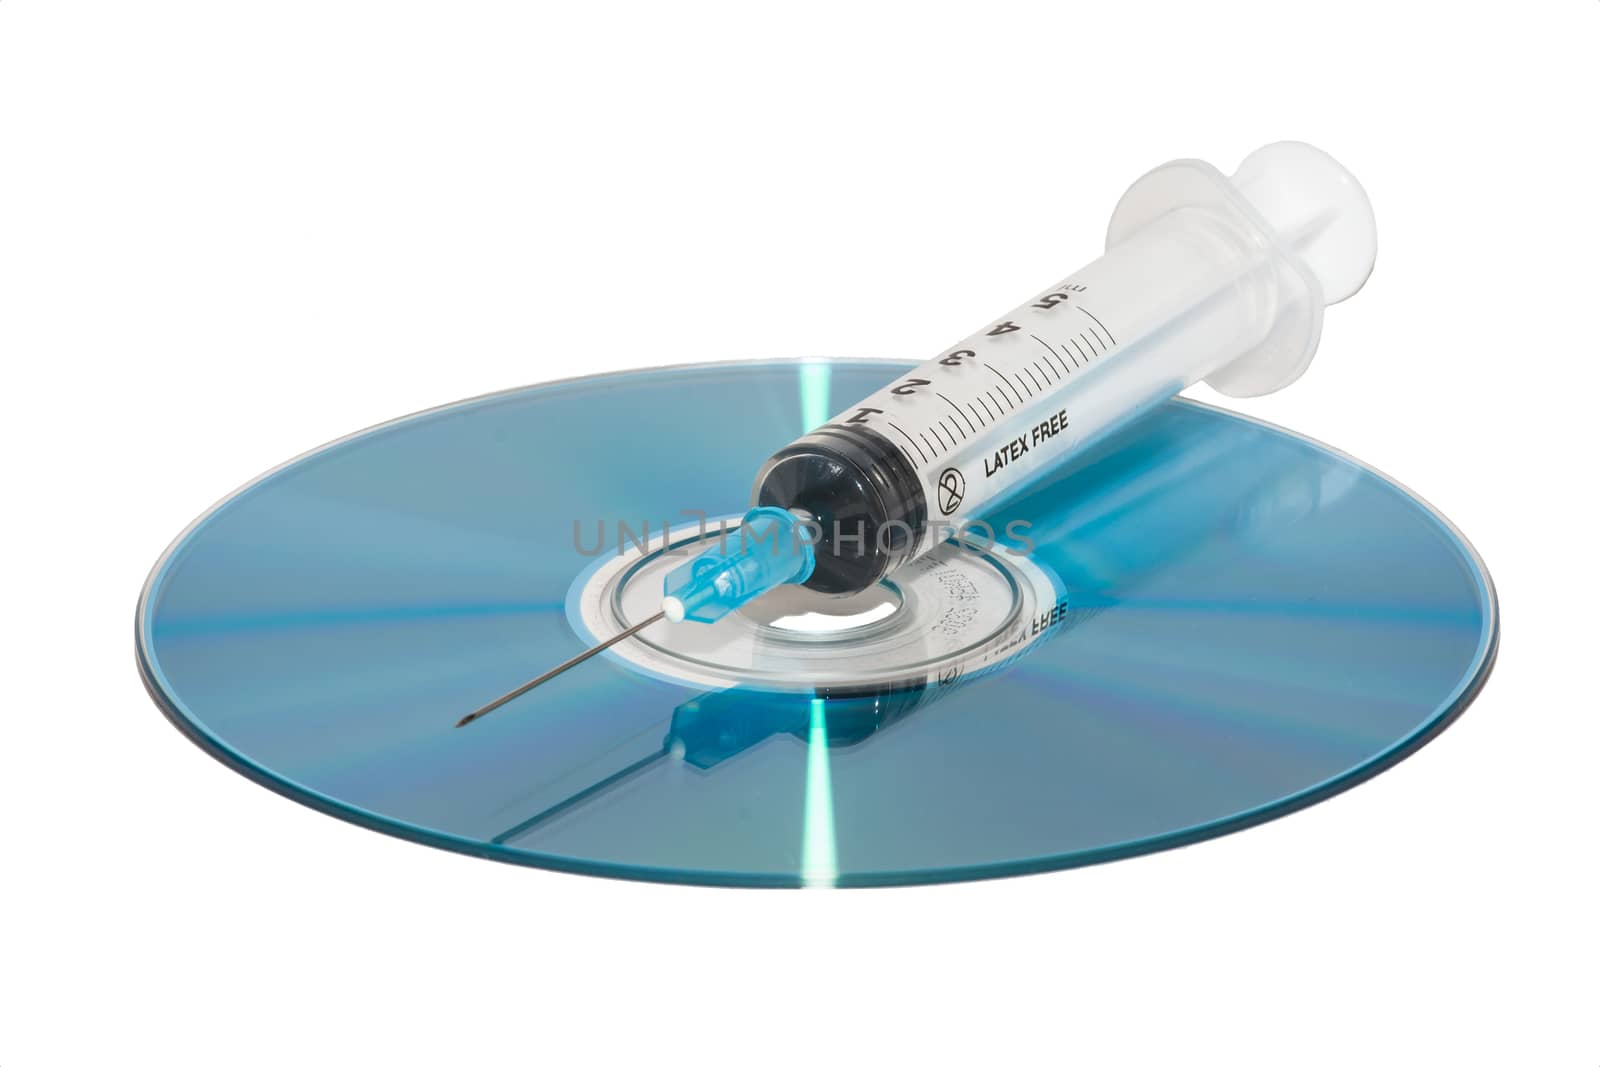 DVD and syringe by huntz